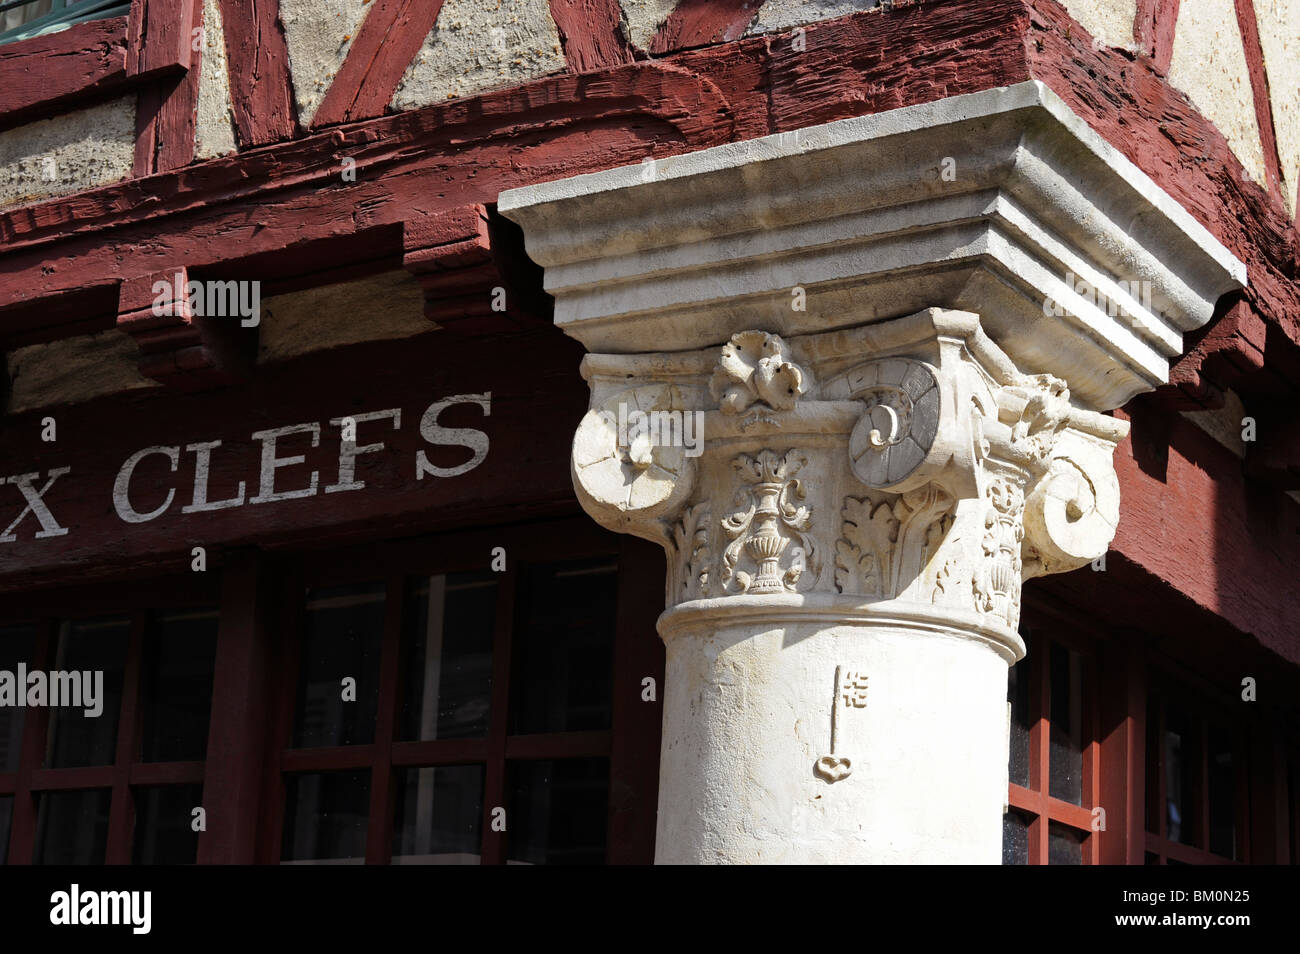 Le pilier aux clefs in Grande Rue,Plantagenet City, Old town of Le Mans, Sarthe, France Stock Photo